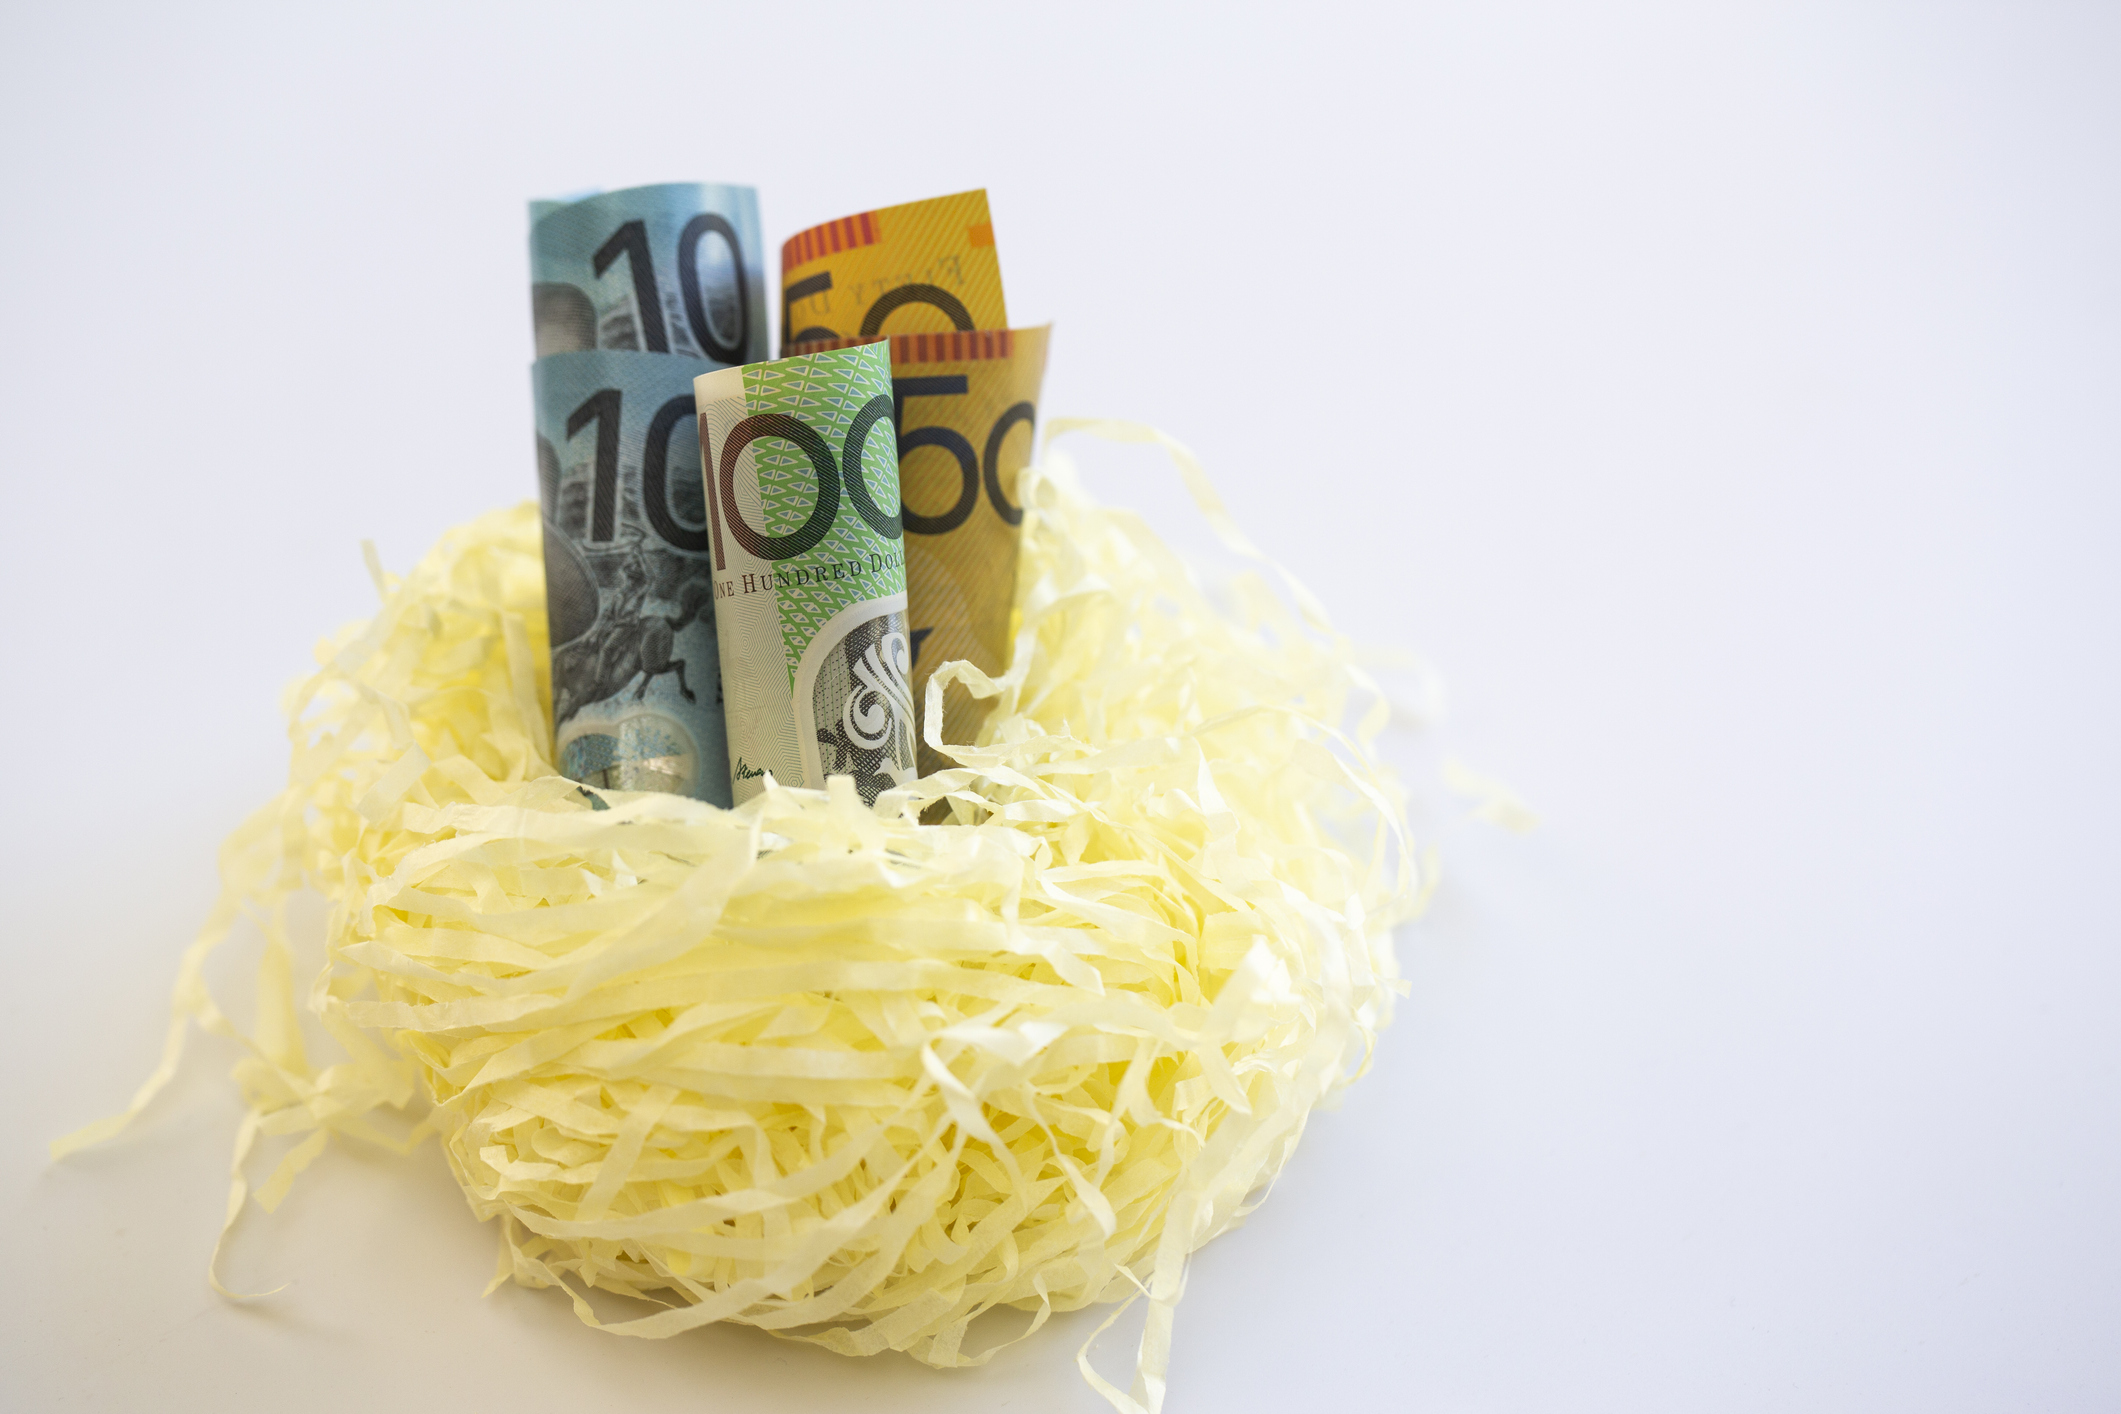 Industry Super boss says raiding retirement ‘nest eggs’ should be last resort